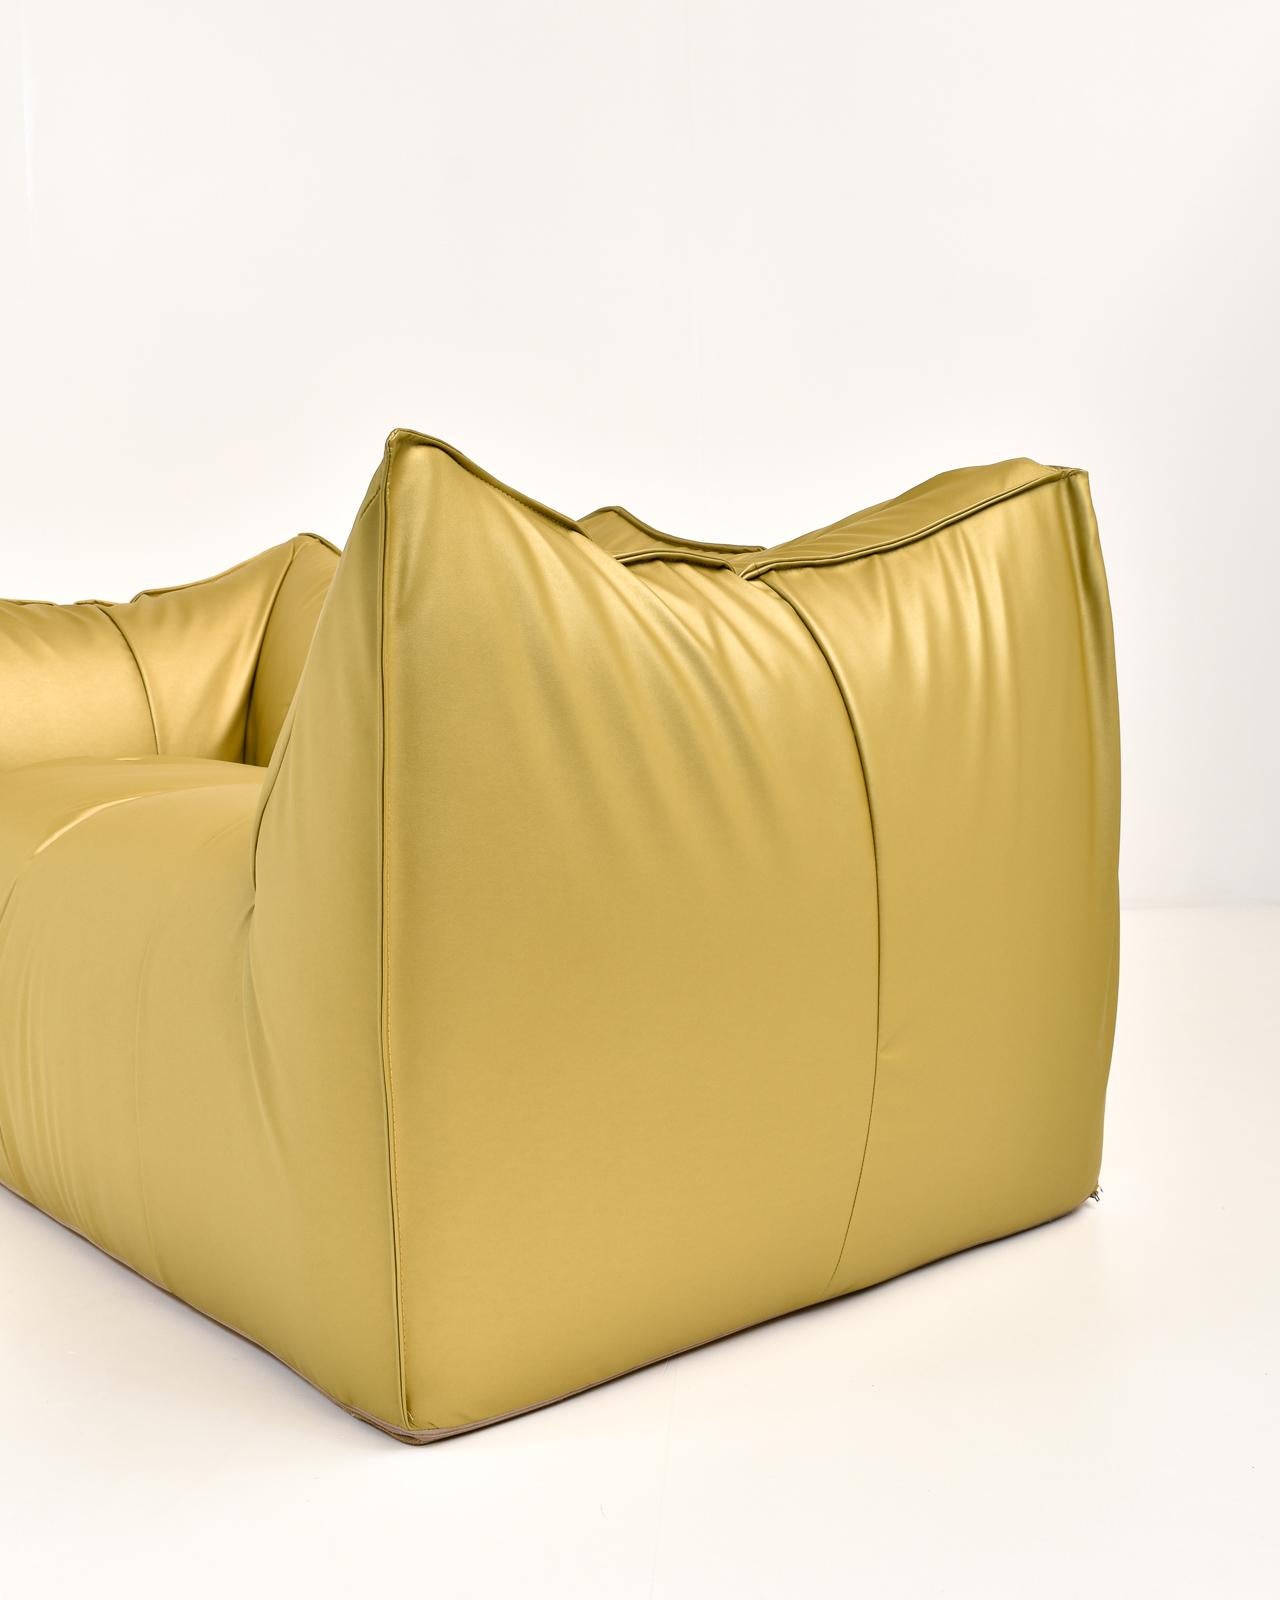 Golden Le Bambole Sofa by Mario Bellini for B&B Italia 1